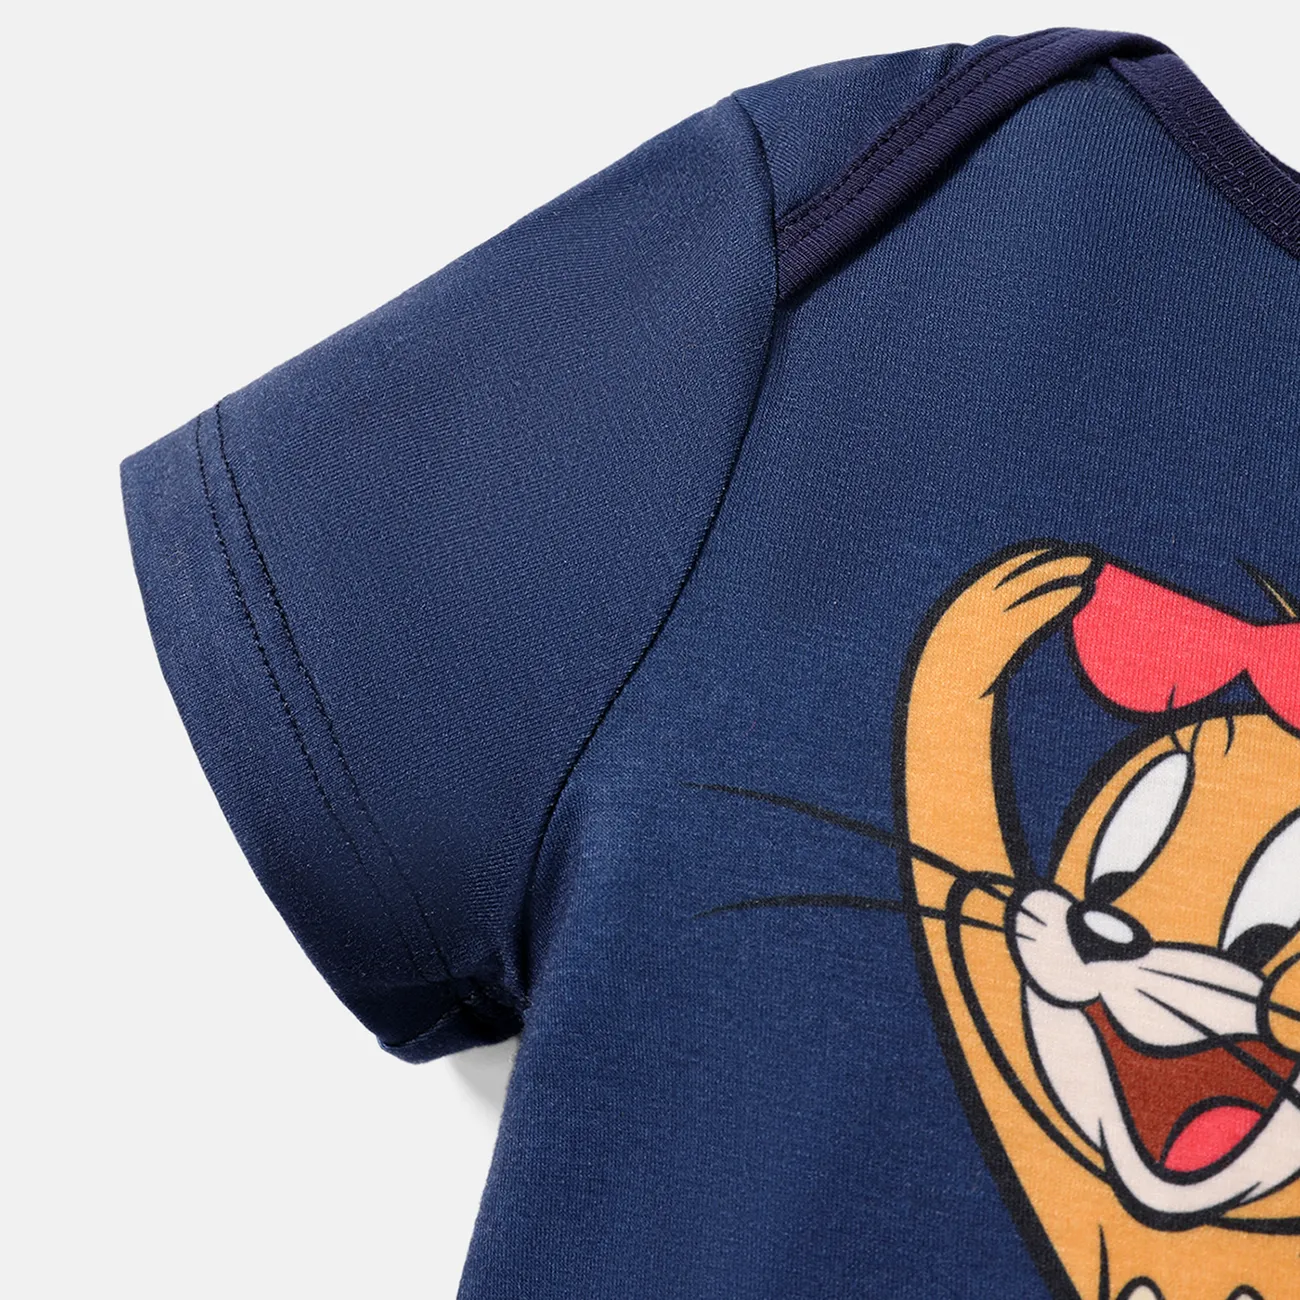 Tom and Jerry Familien-Looks Muttertag Katze Kurzärmelig Familien-Outfits Oberteile Mehrfarbig big image 1